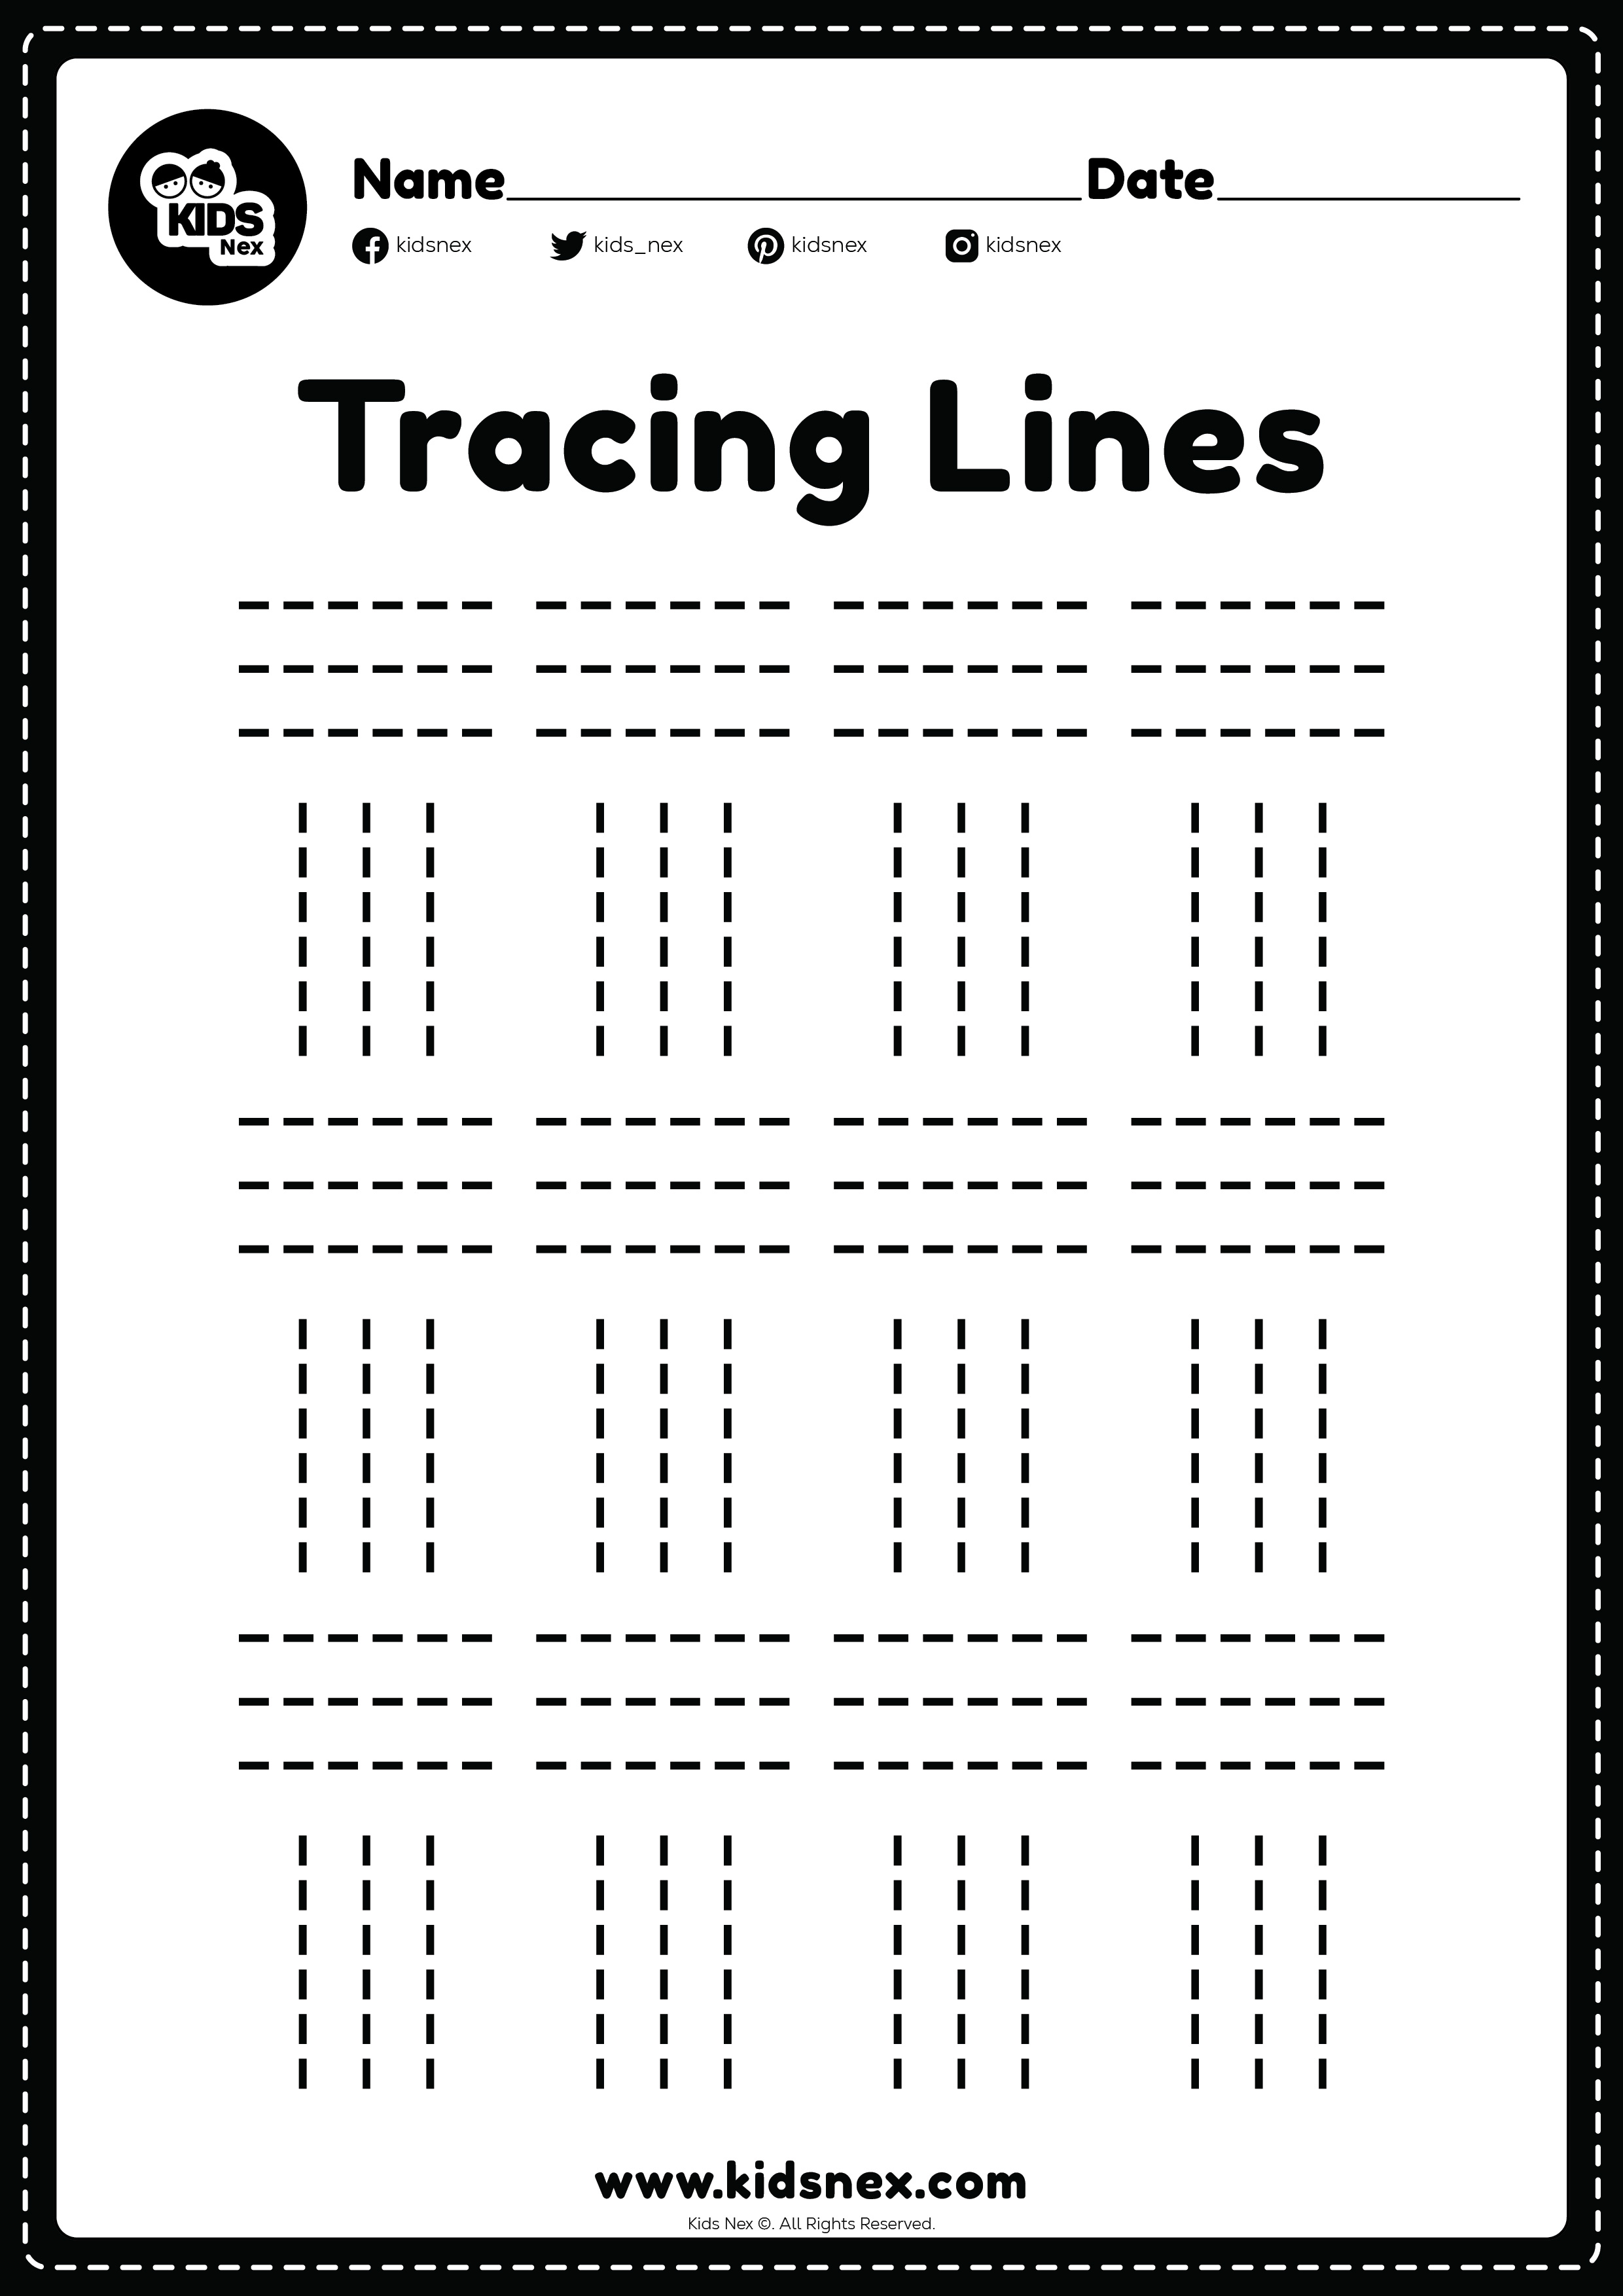 Tracing lines preschool worksheet for kindergarten kids for educational activities in a free printable page